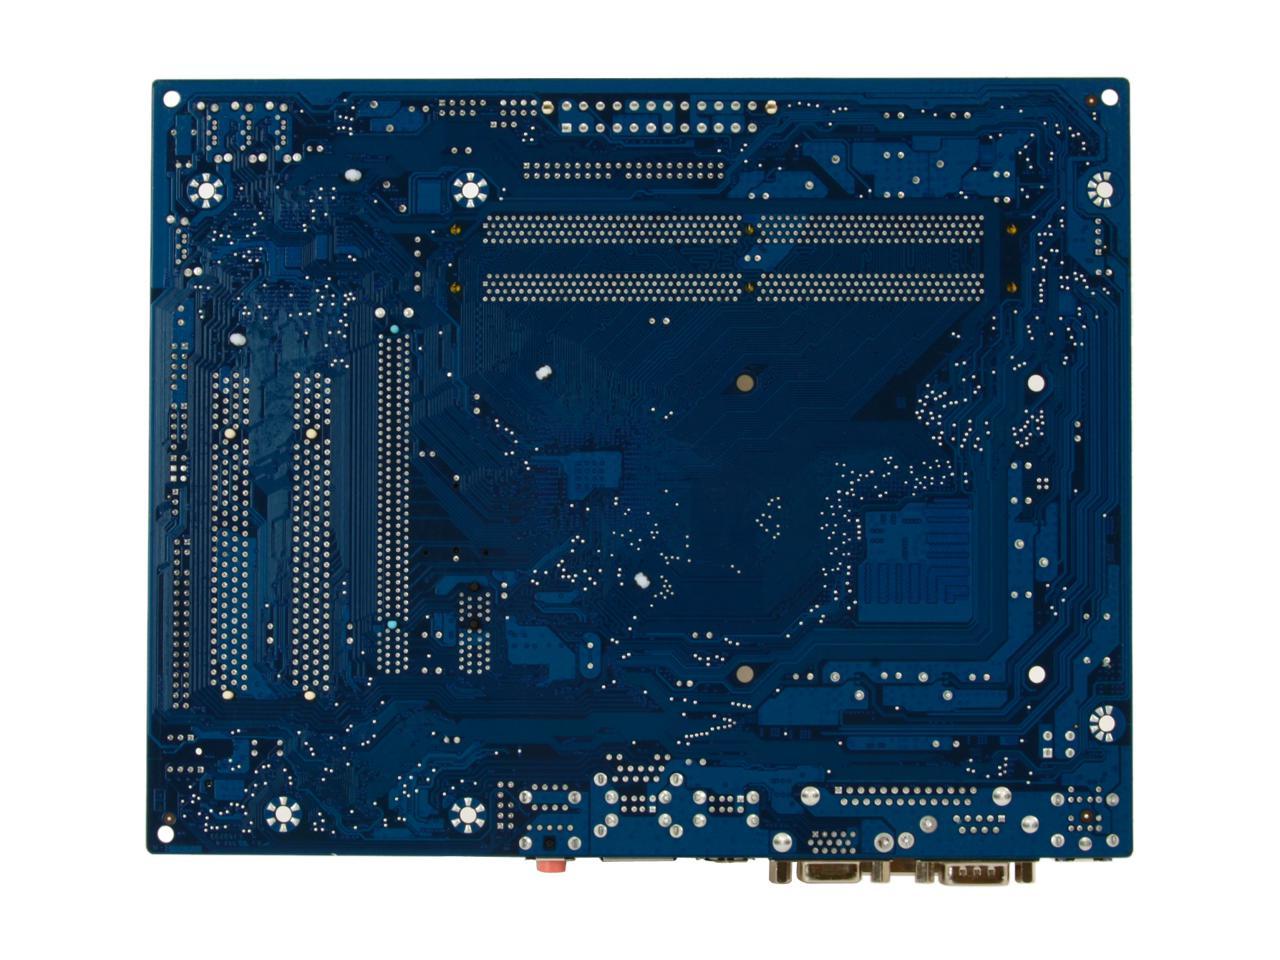 Gigabyte Ga G31m S2l Lga 775 Micro Atx Intel Motherboard Newegg Com